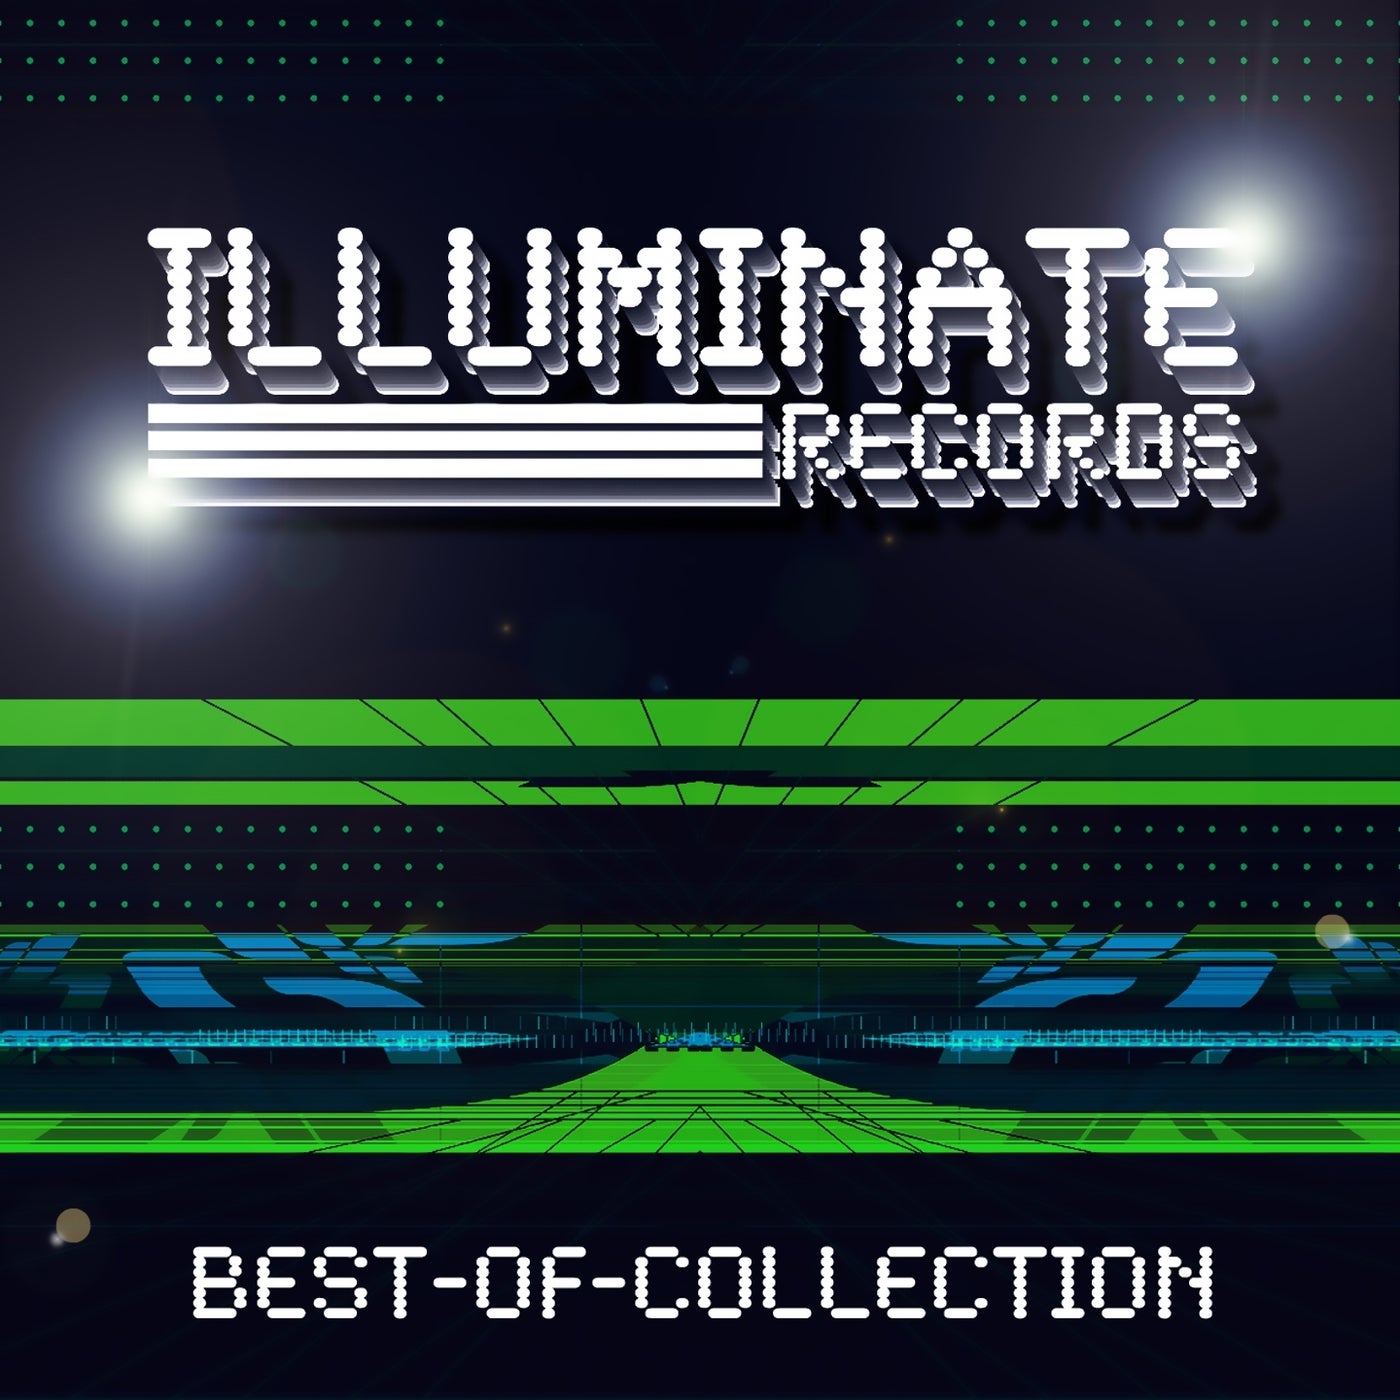 Illuminate Records